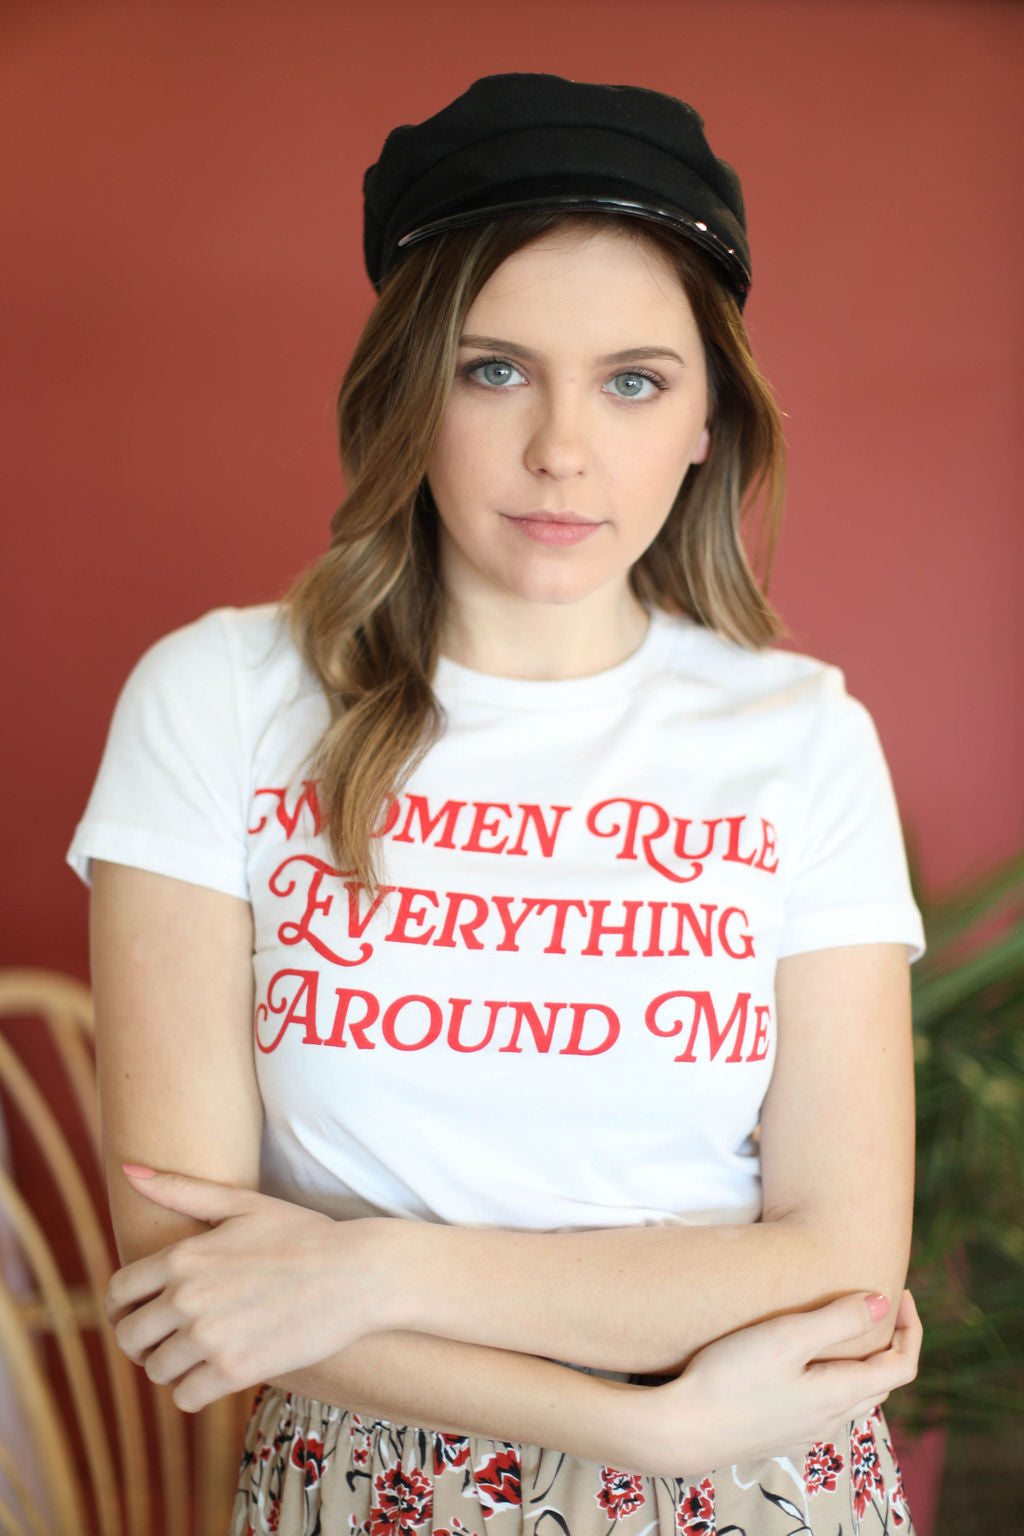 "Women Rule Everything Around Me" T-Shirt